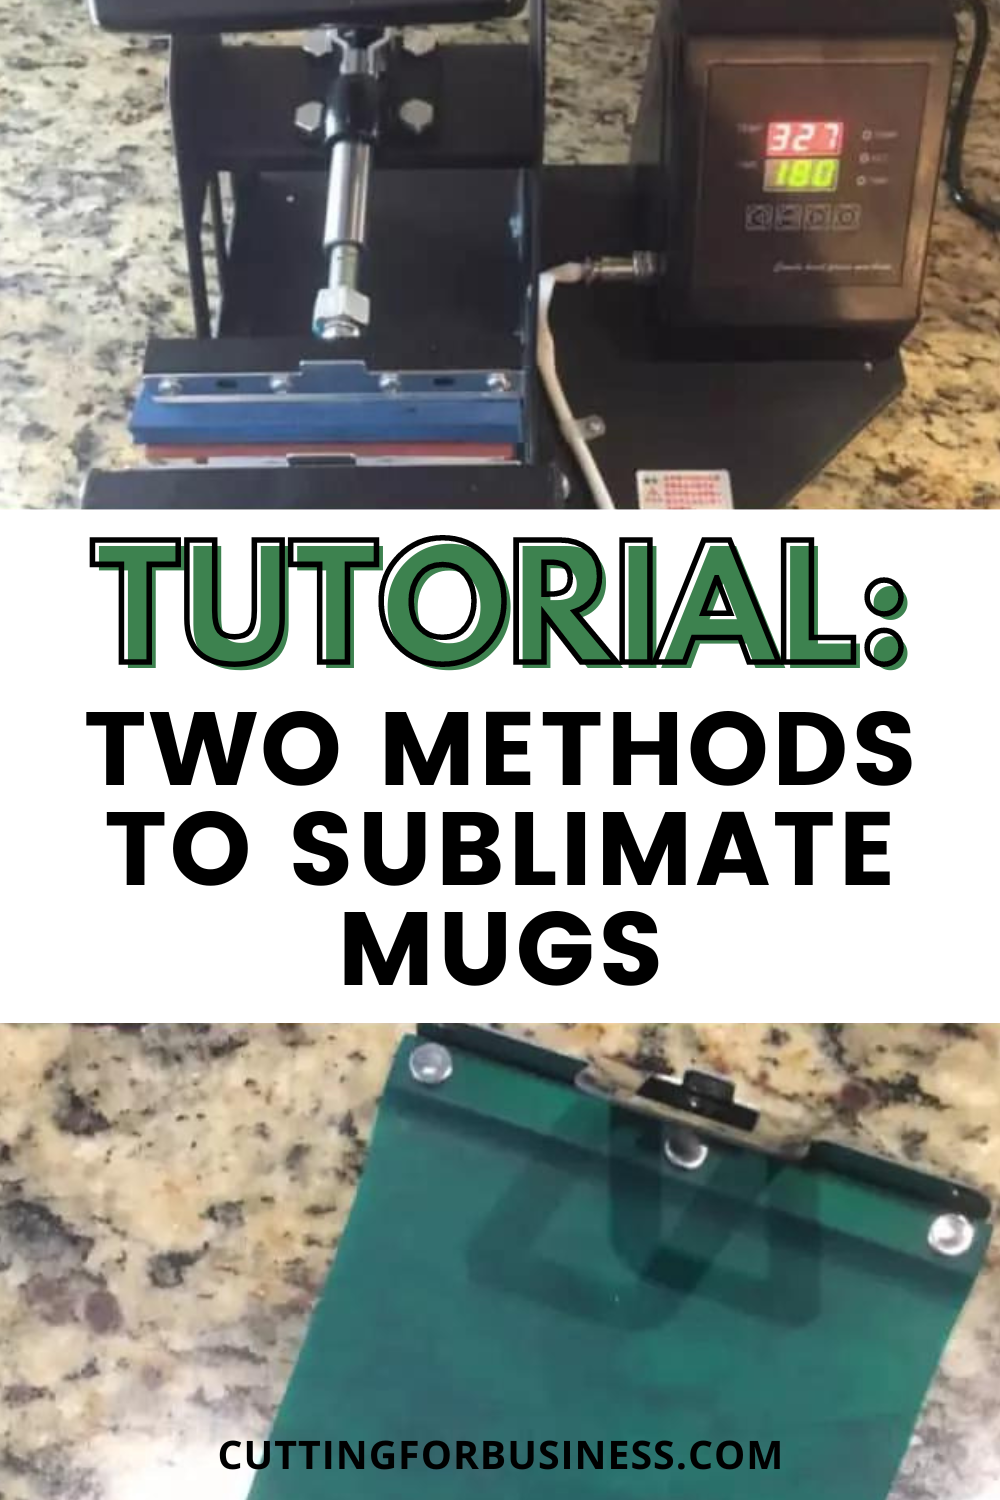 Tutorial: Two Methods to Sublimate Mugs - cuttingforbusiness.com